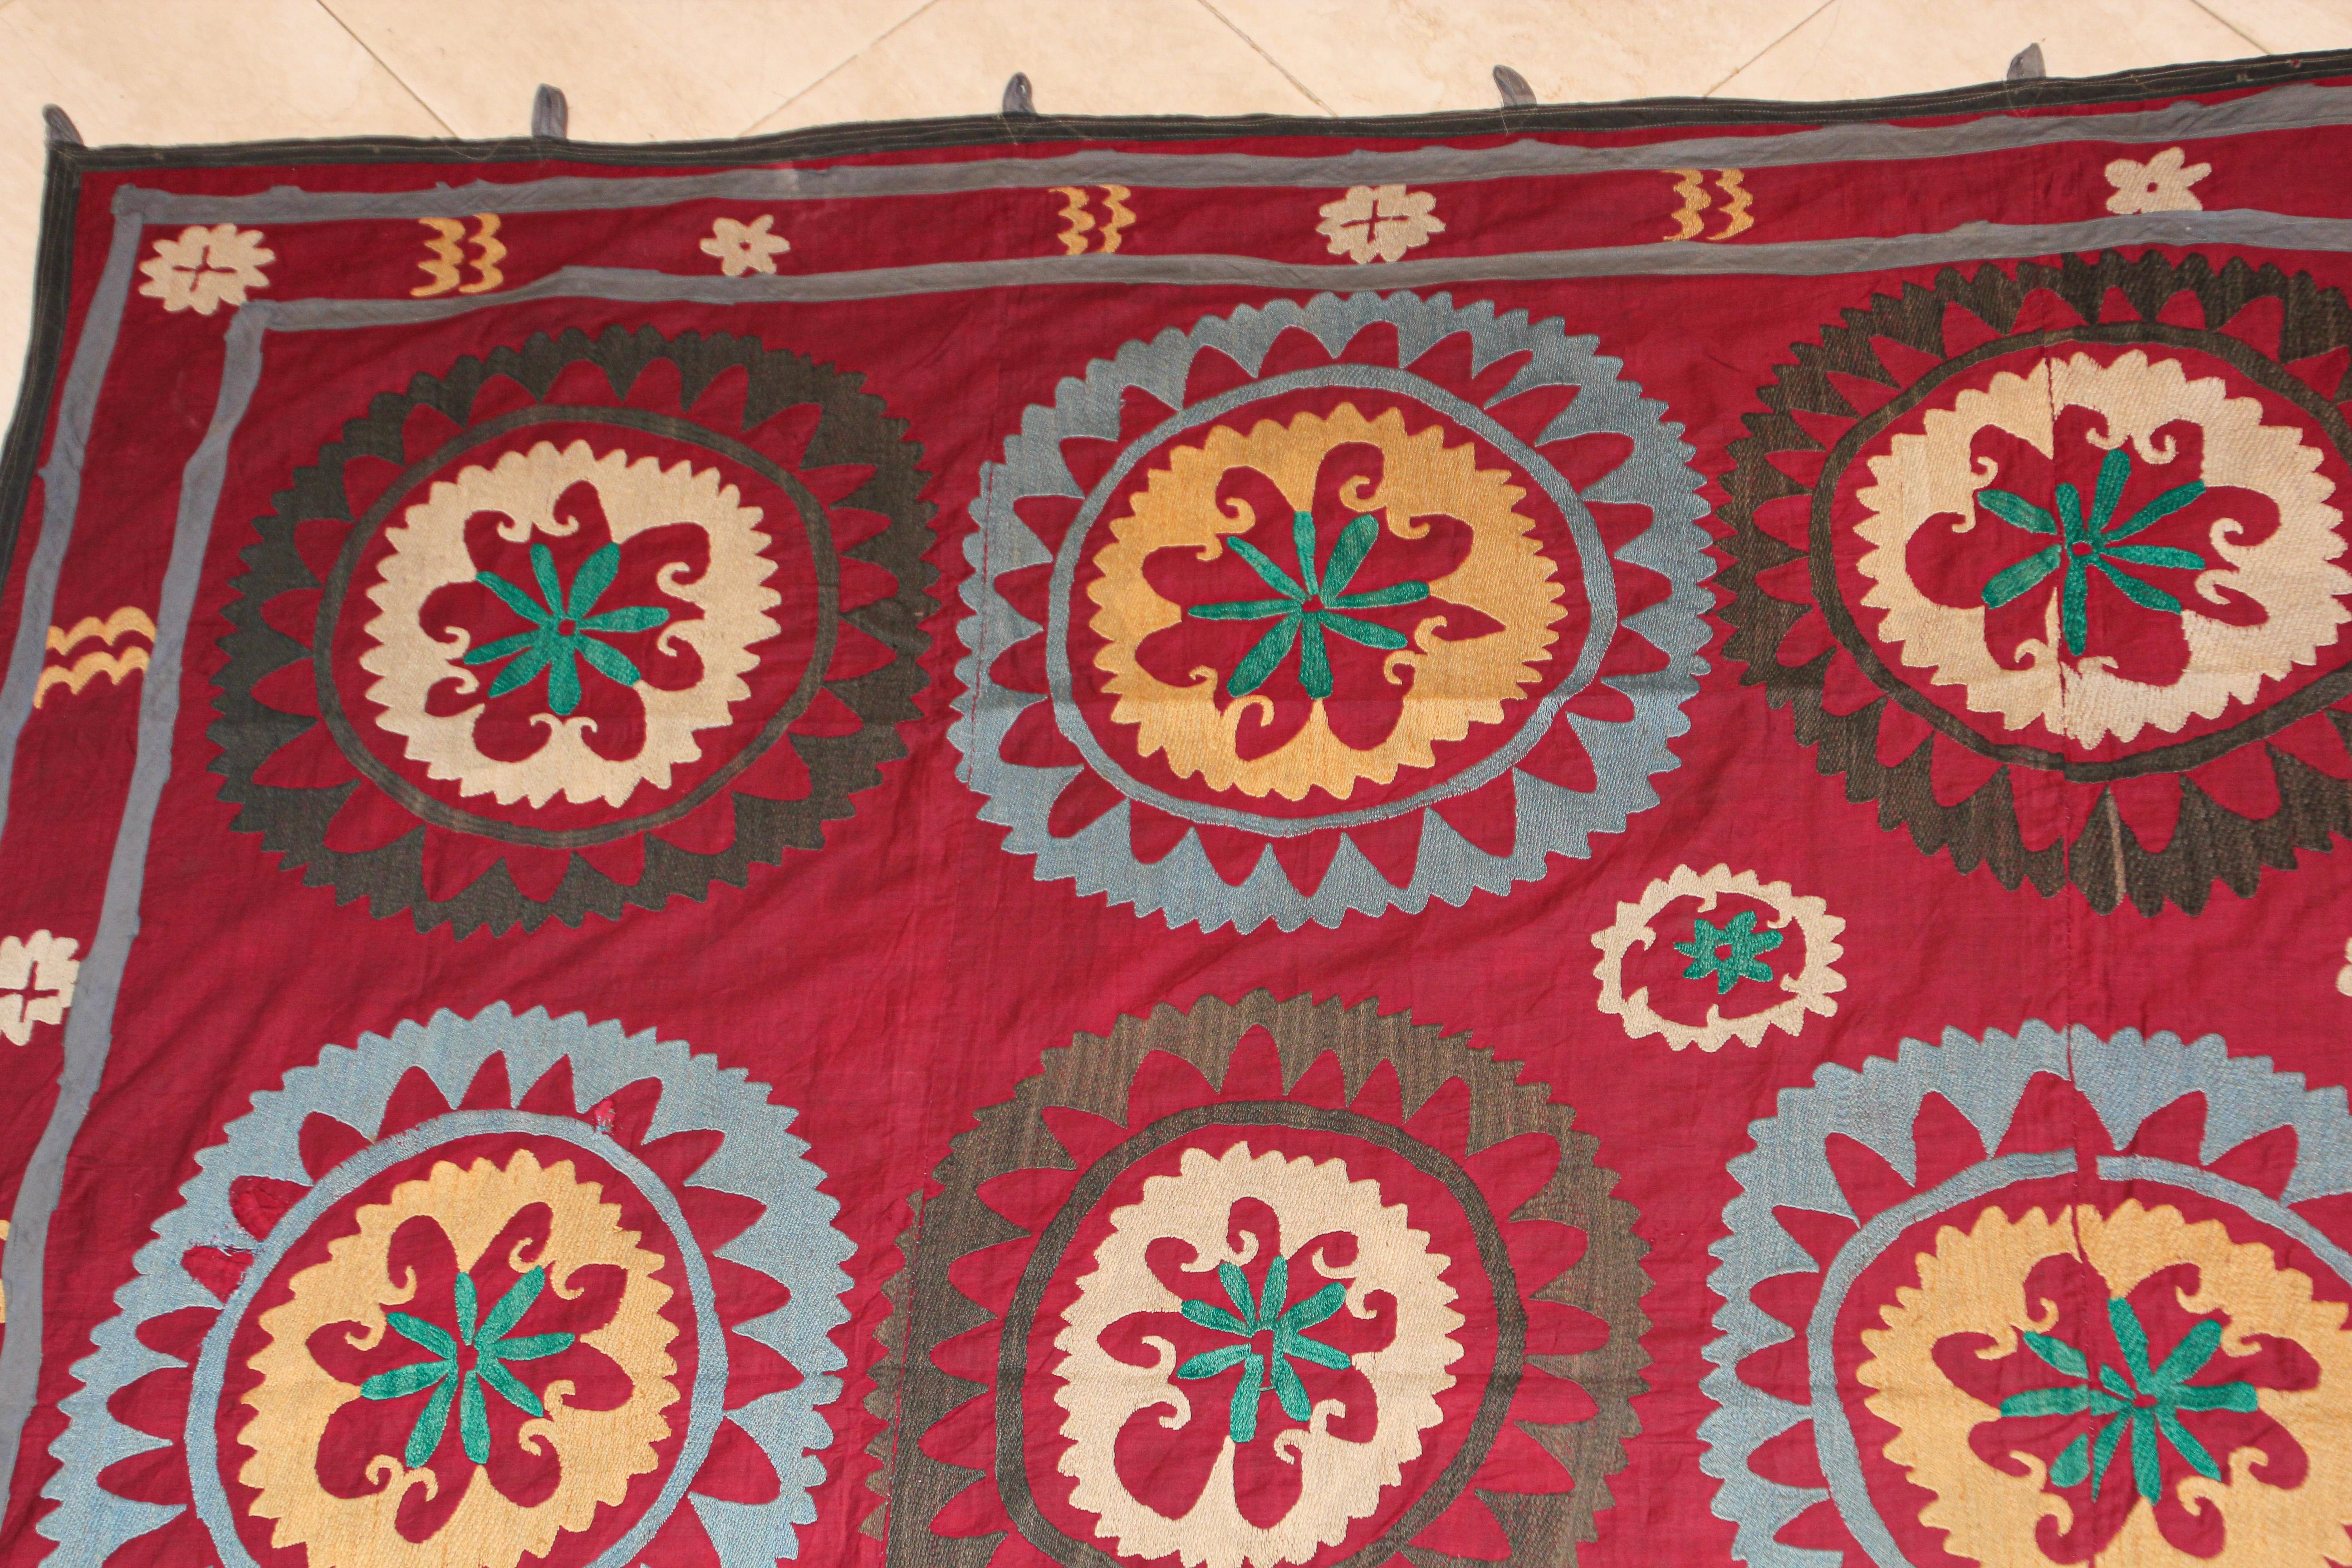 Embroidered Vintage Uzbek Suzani Needlework Textile Blanket or Tapestry